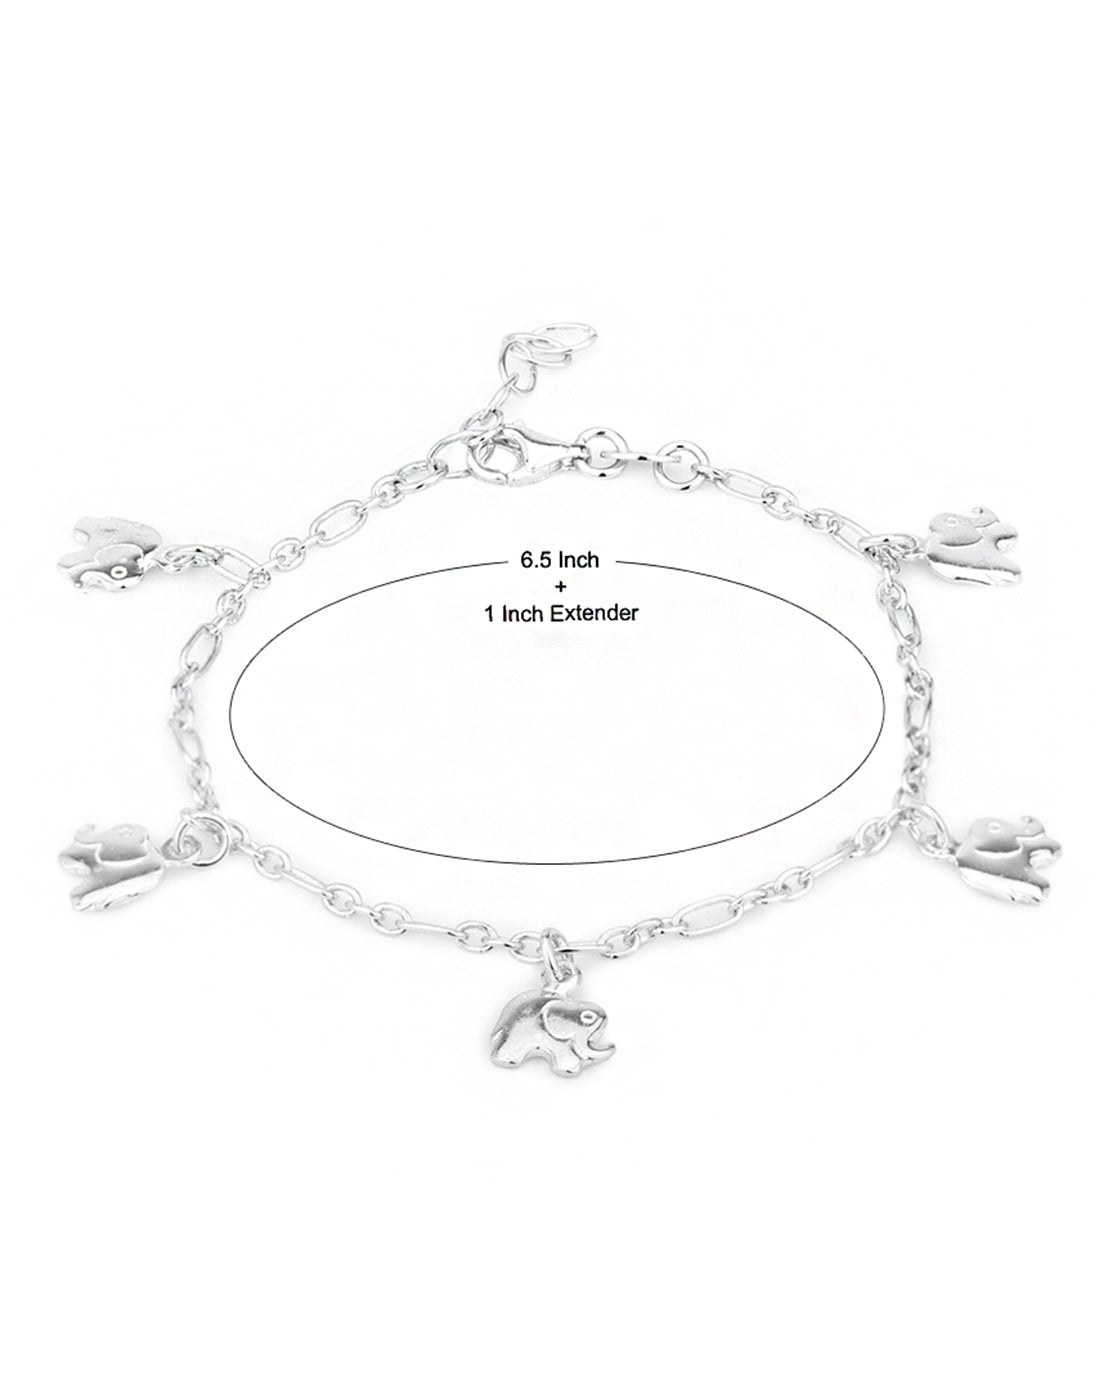 Carlton London 925 Sterling Silver Rhodium Plated Elephant Charm Bracelet